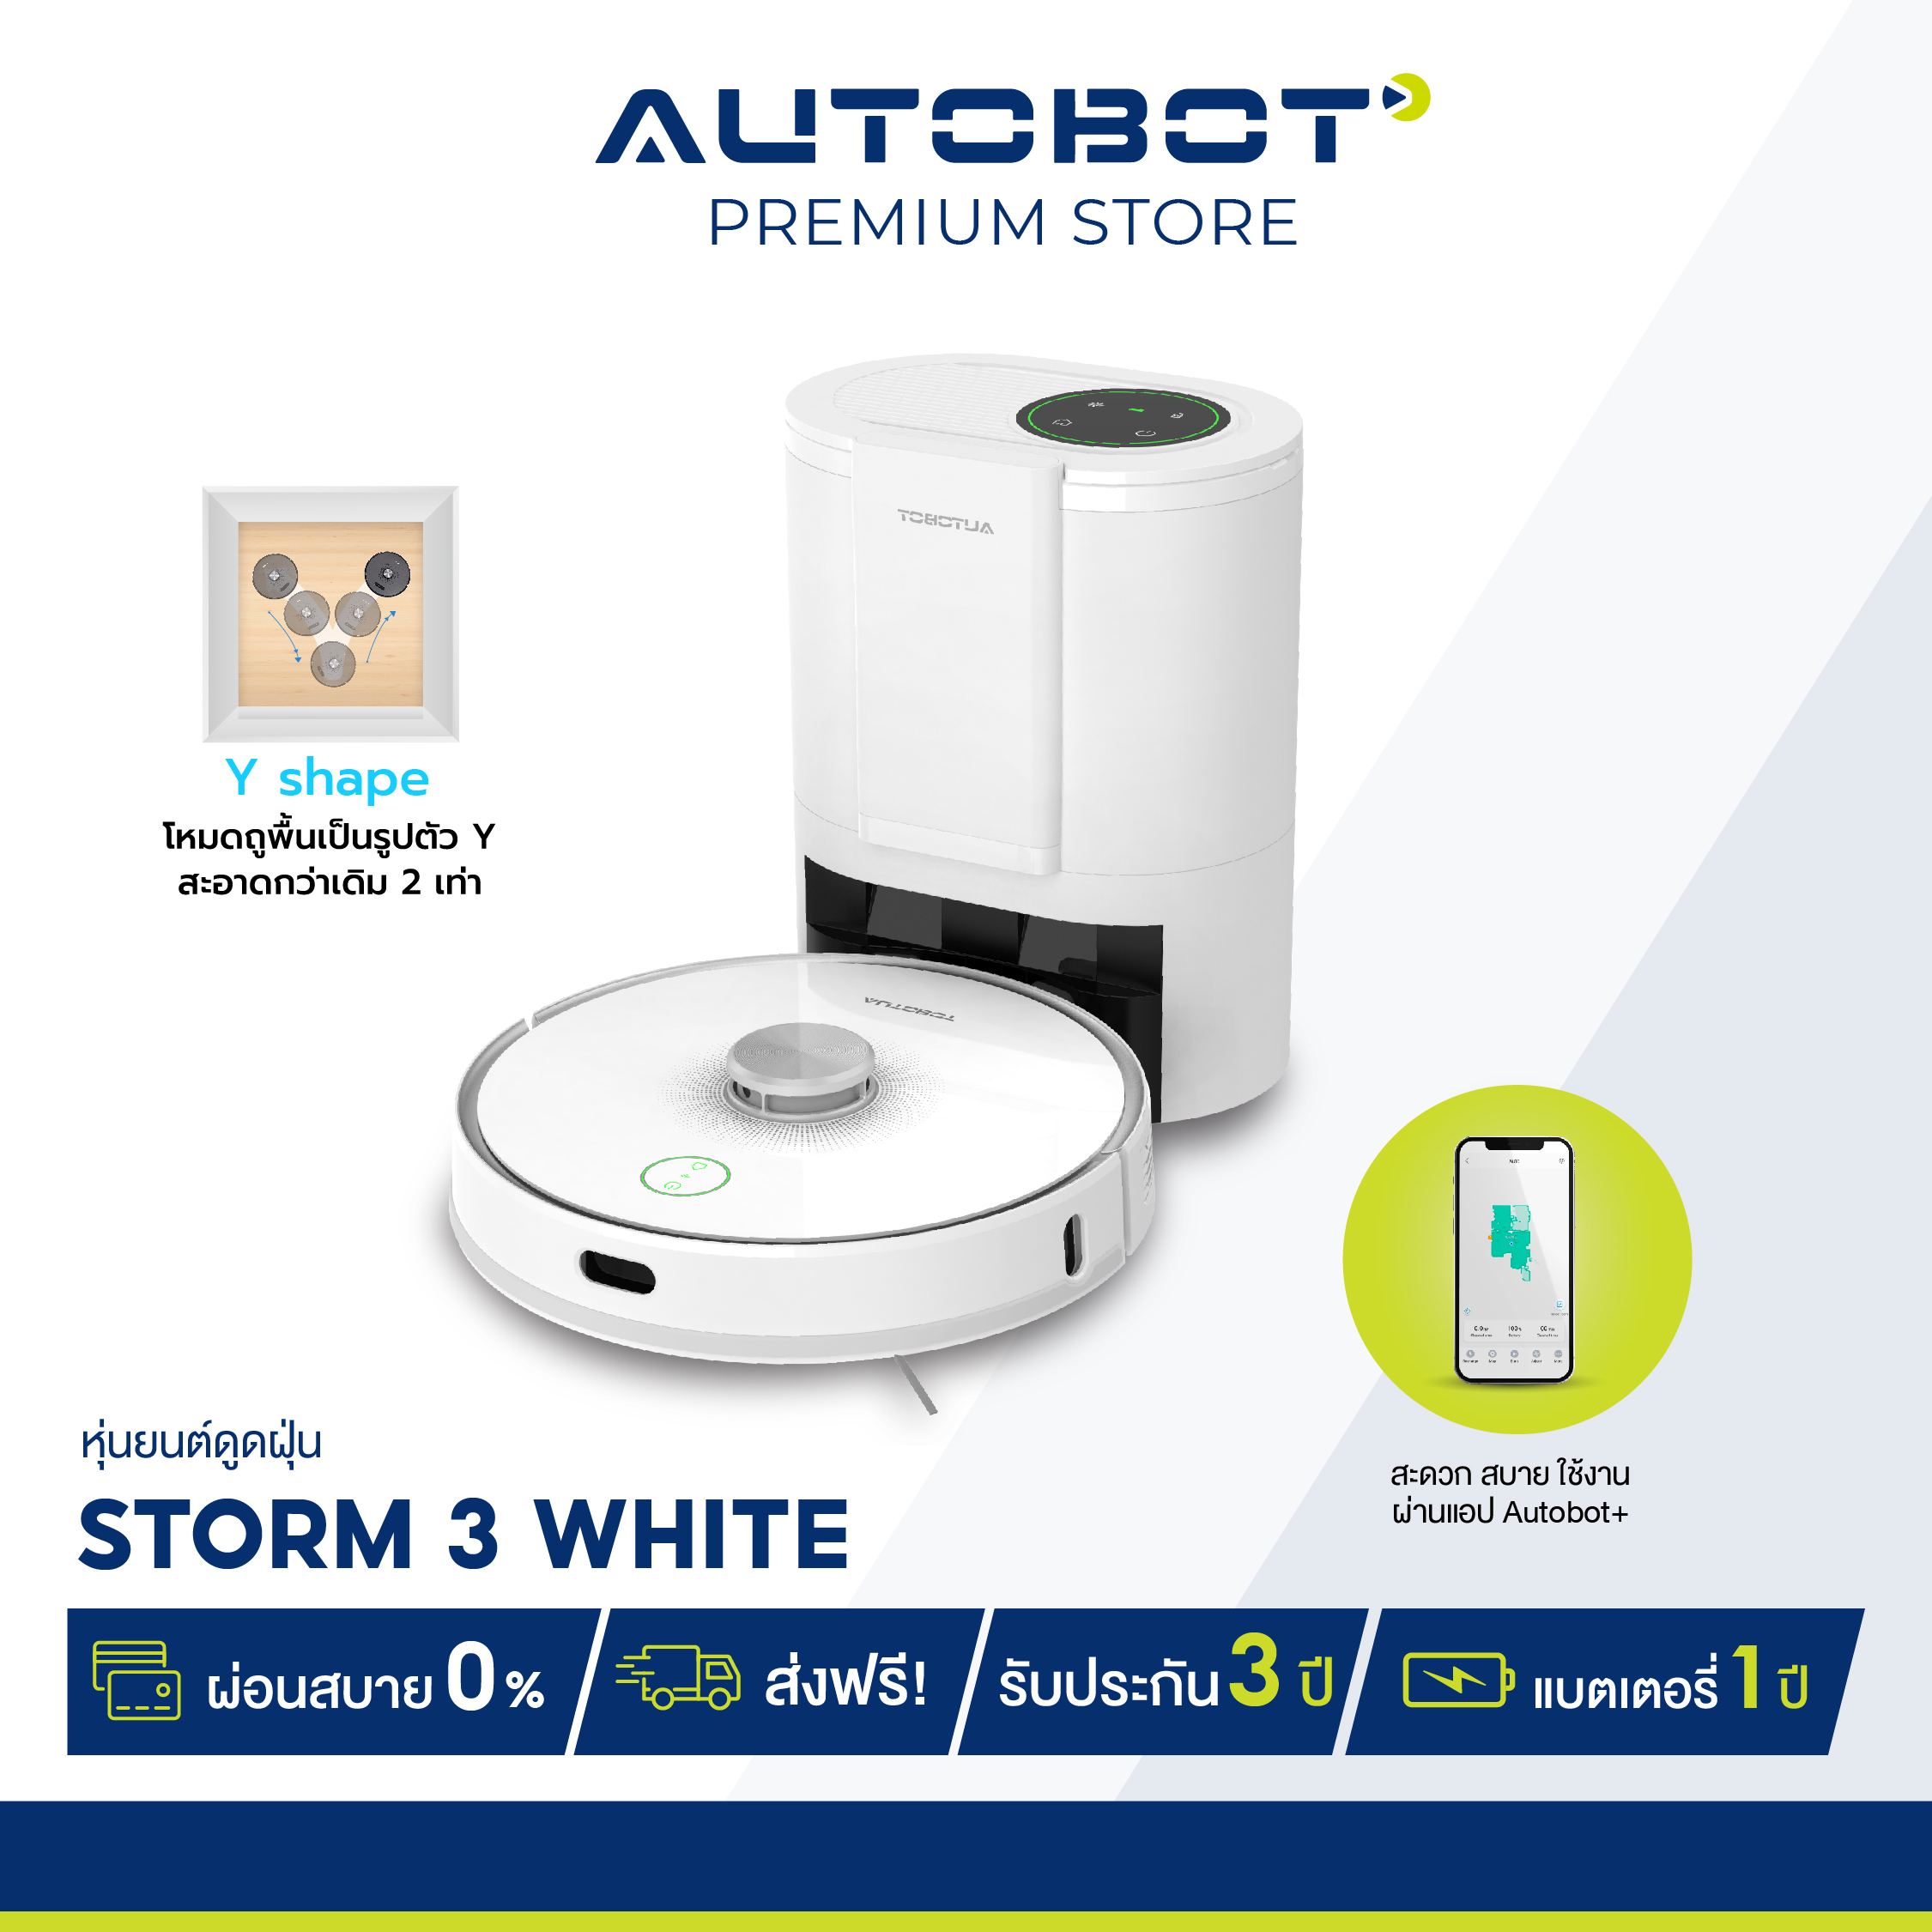 AUTOBOT หุ่นยนต์ดูดฝุ่น เสียงภาษาไทย ระบบ Laser แรงดูด 2700 Pa พร้อมฟังชั้น Smart Dock 2.0 รุ่น STORM mark 3 สี White สี White